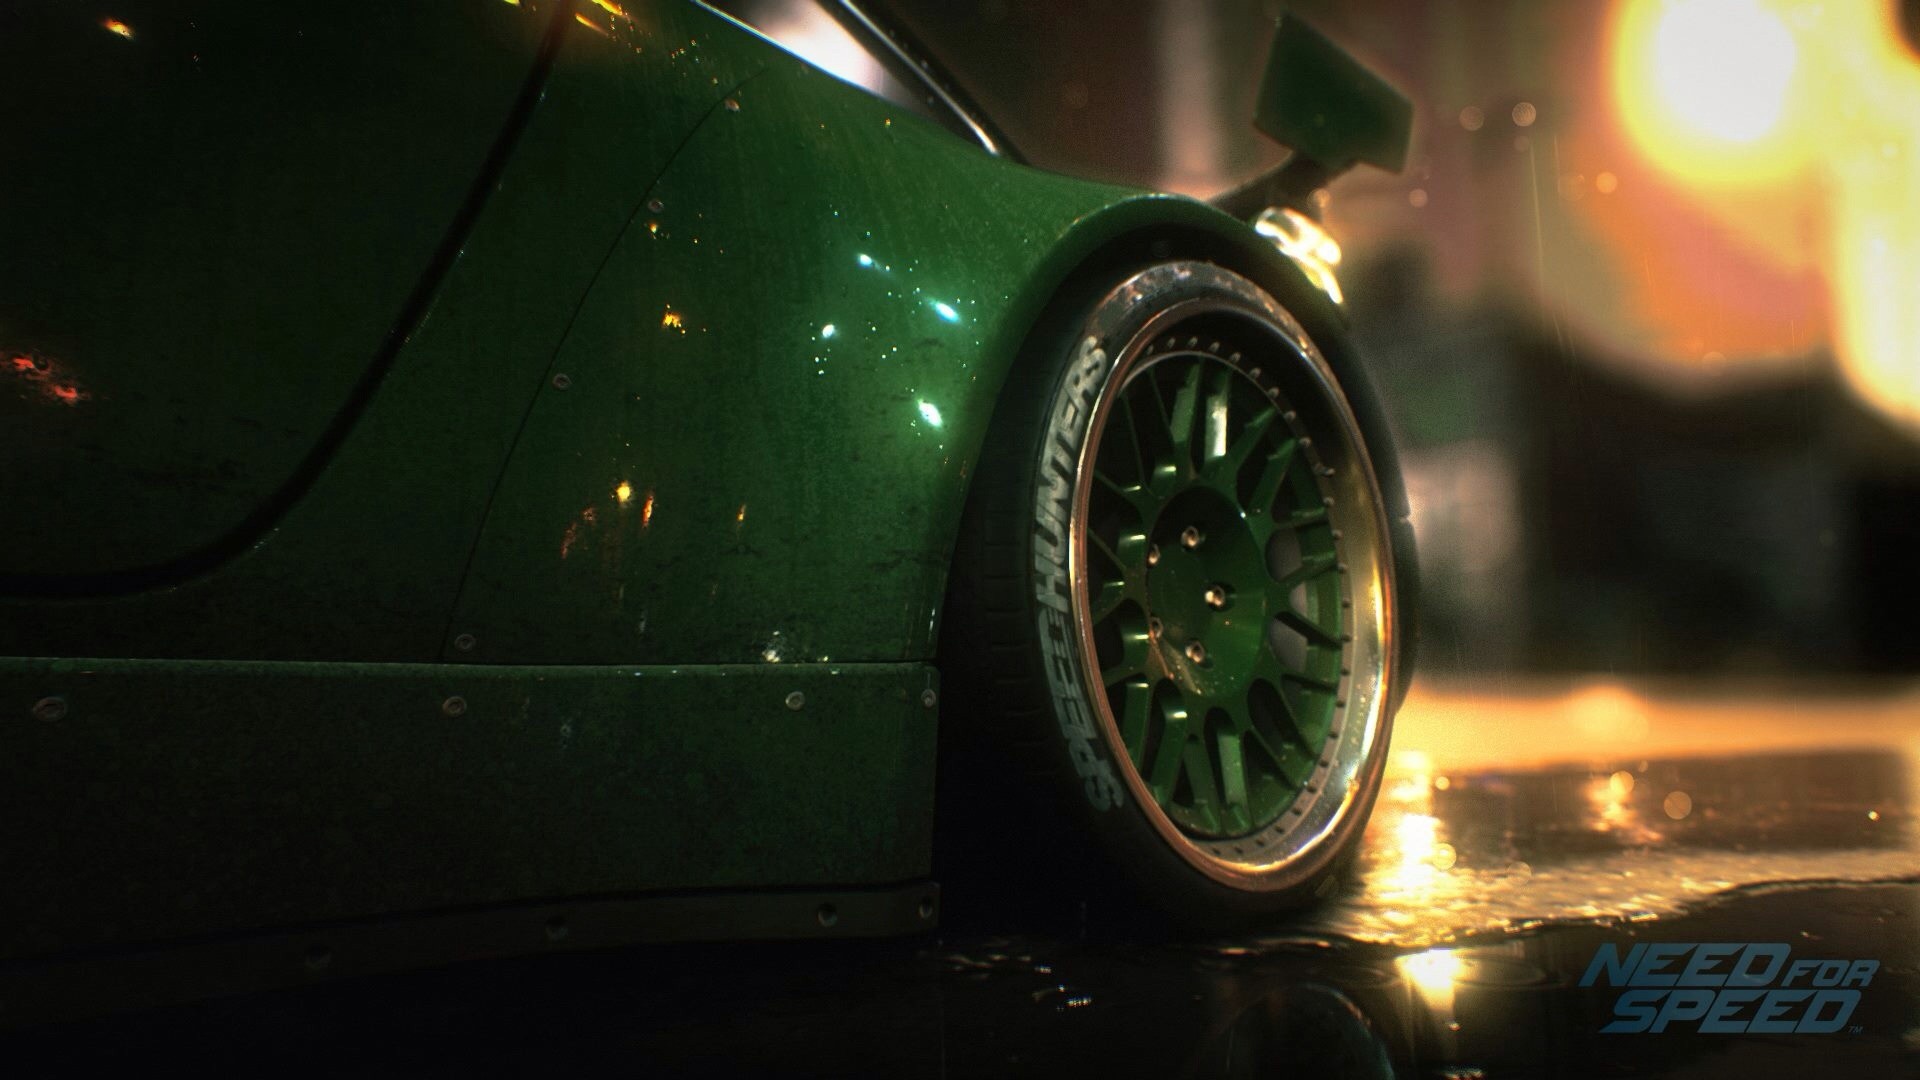 Need For Speed Teaser Shows Rwb Porsche Online Munity Development